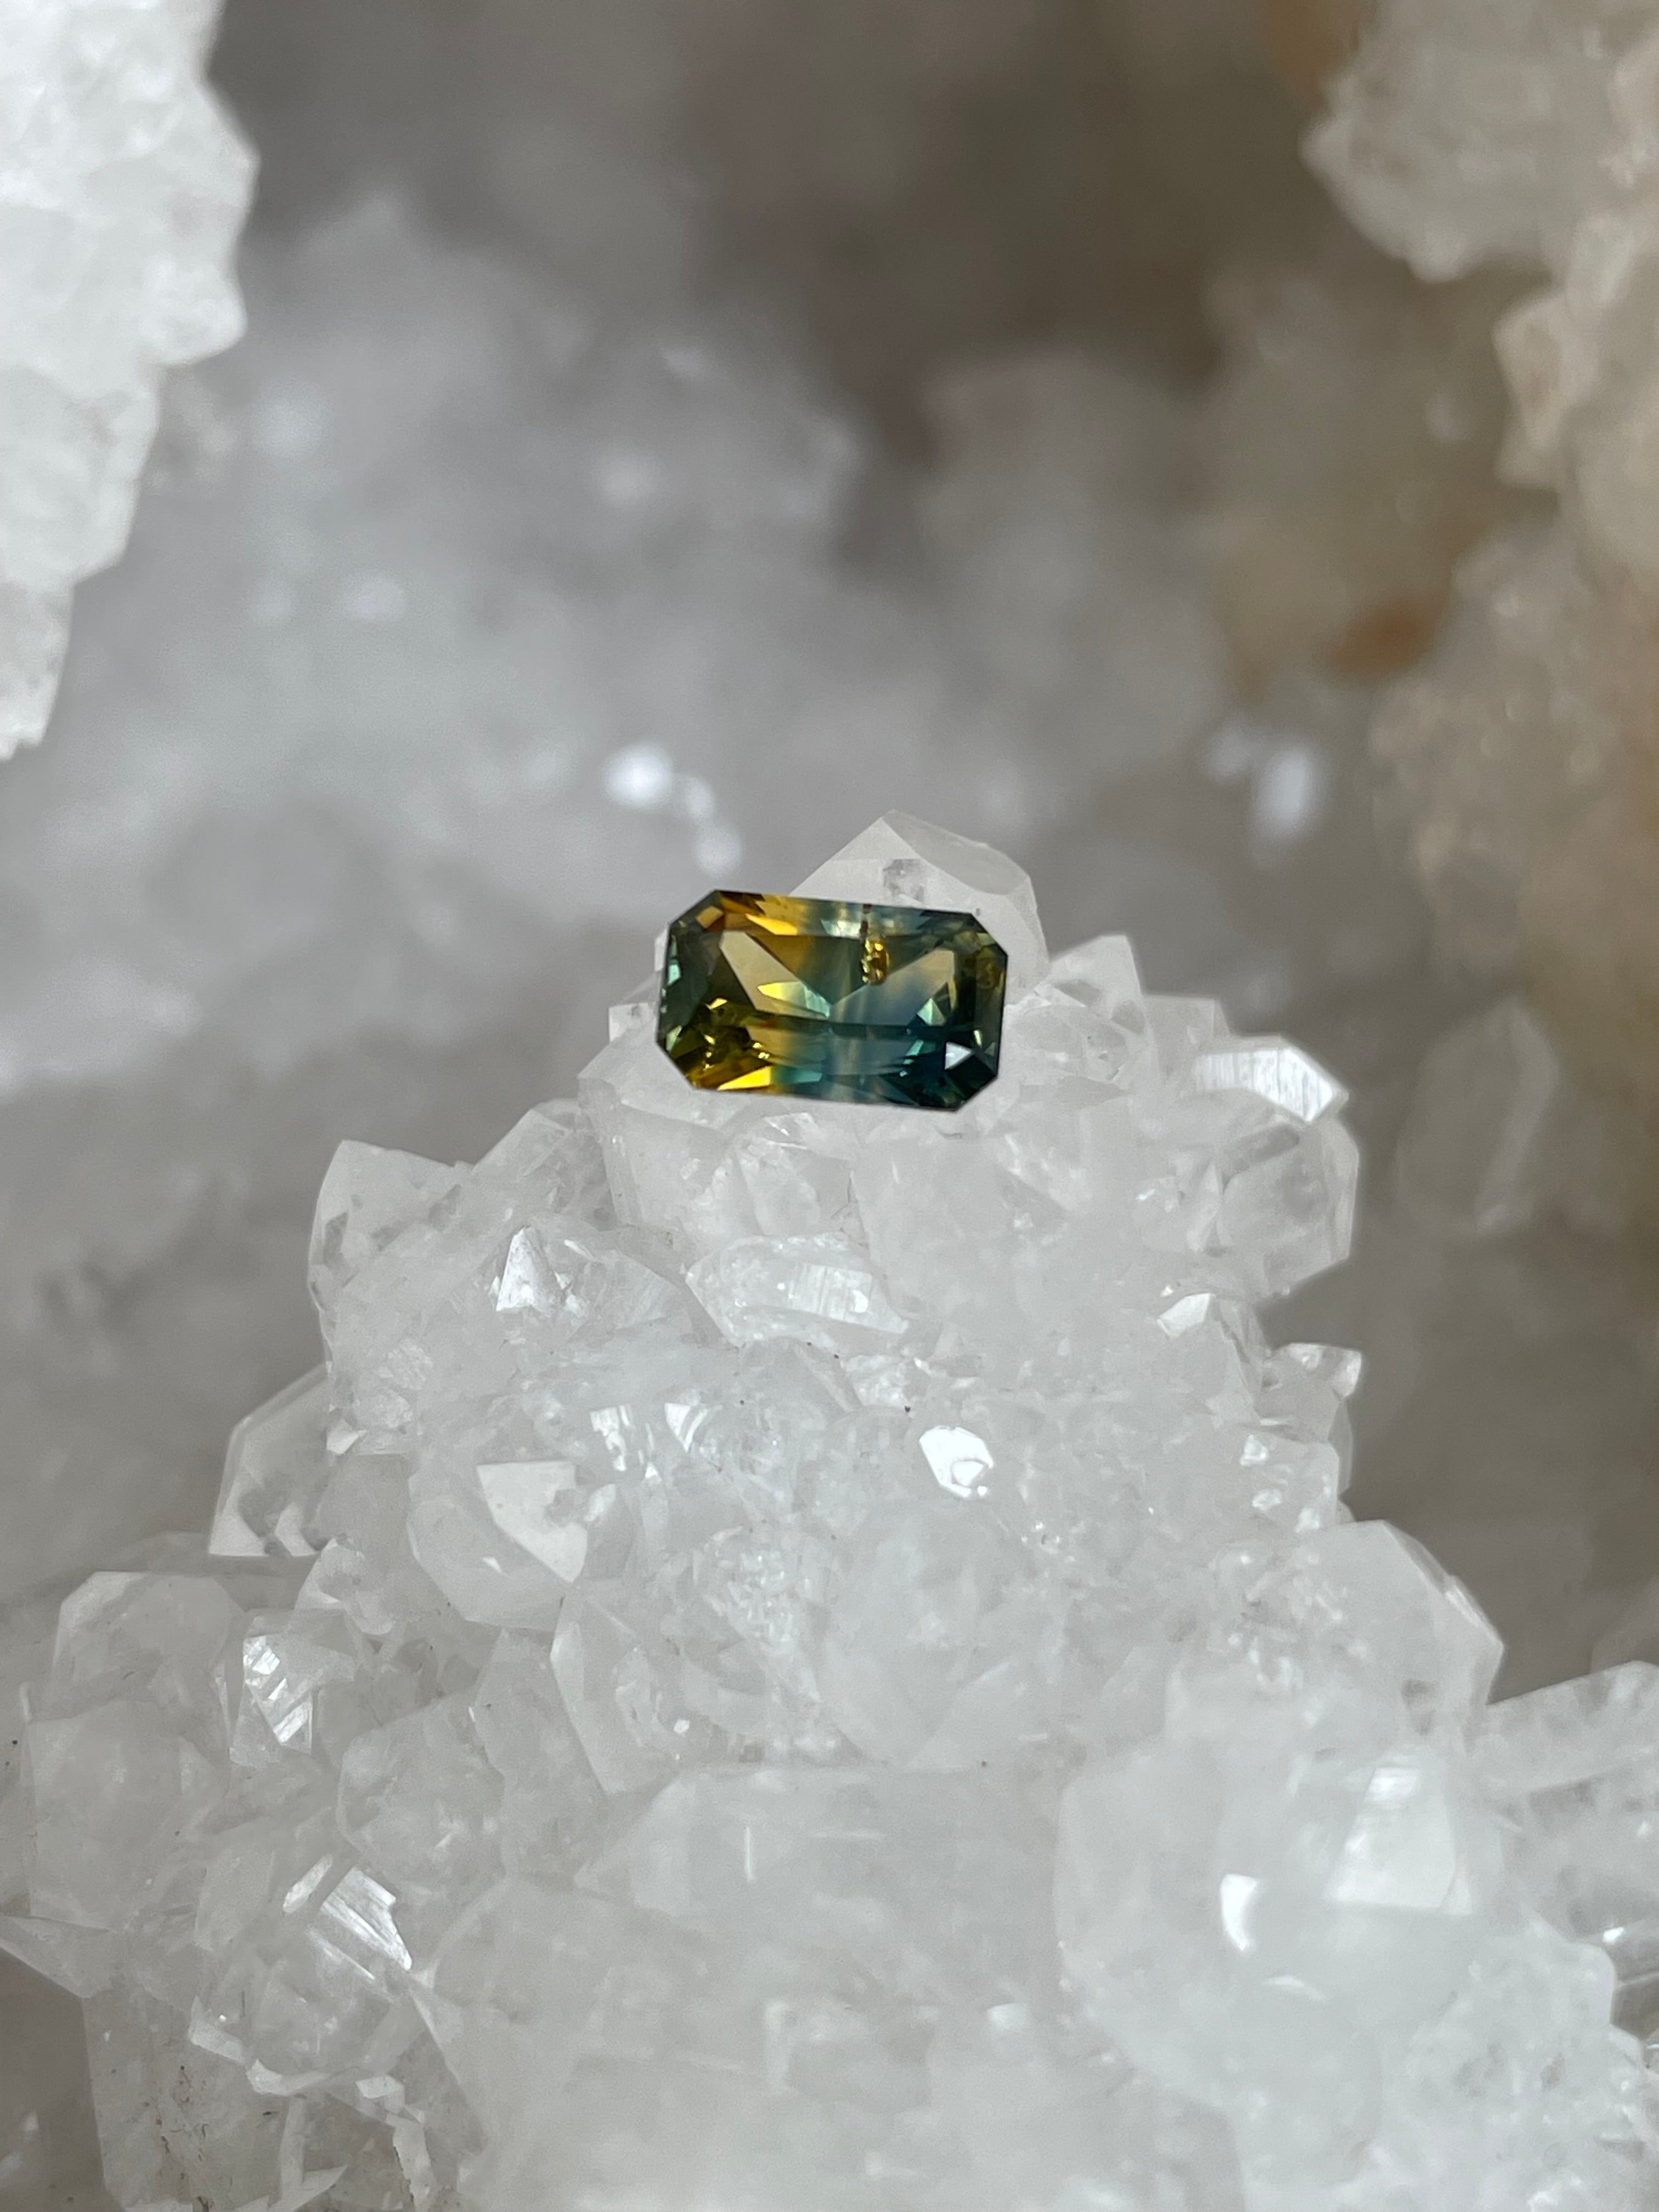 Montana Sapphire 1.62 CT Rare Gold and Blue Striped Emerald Cut